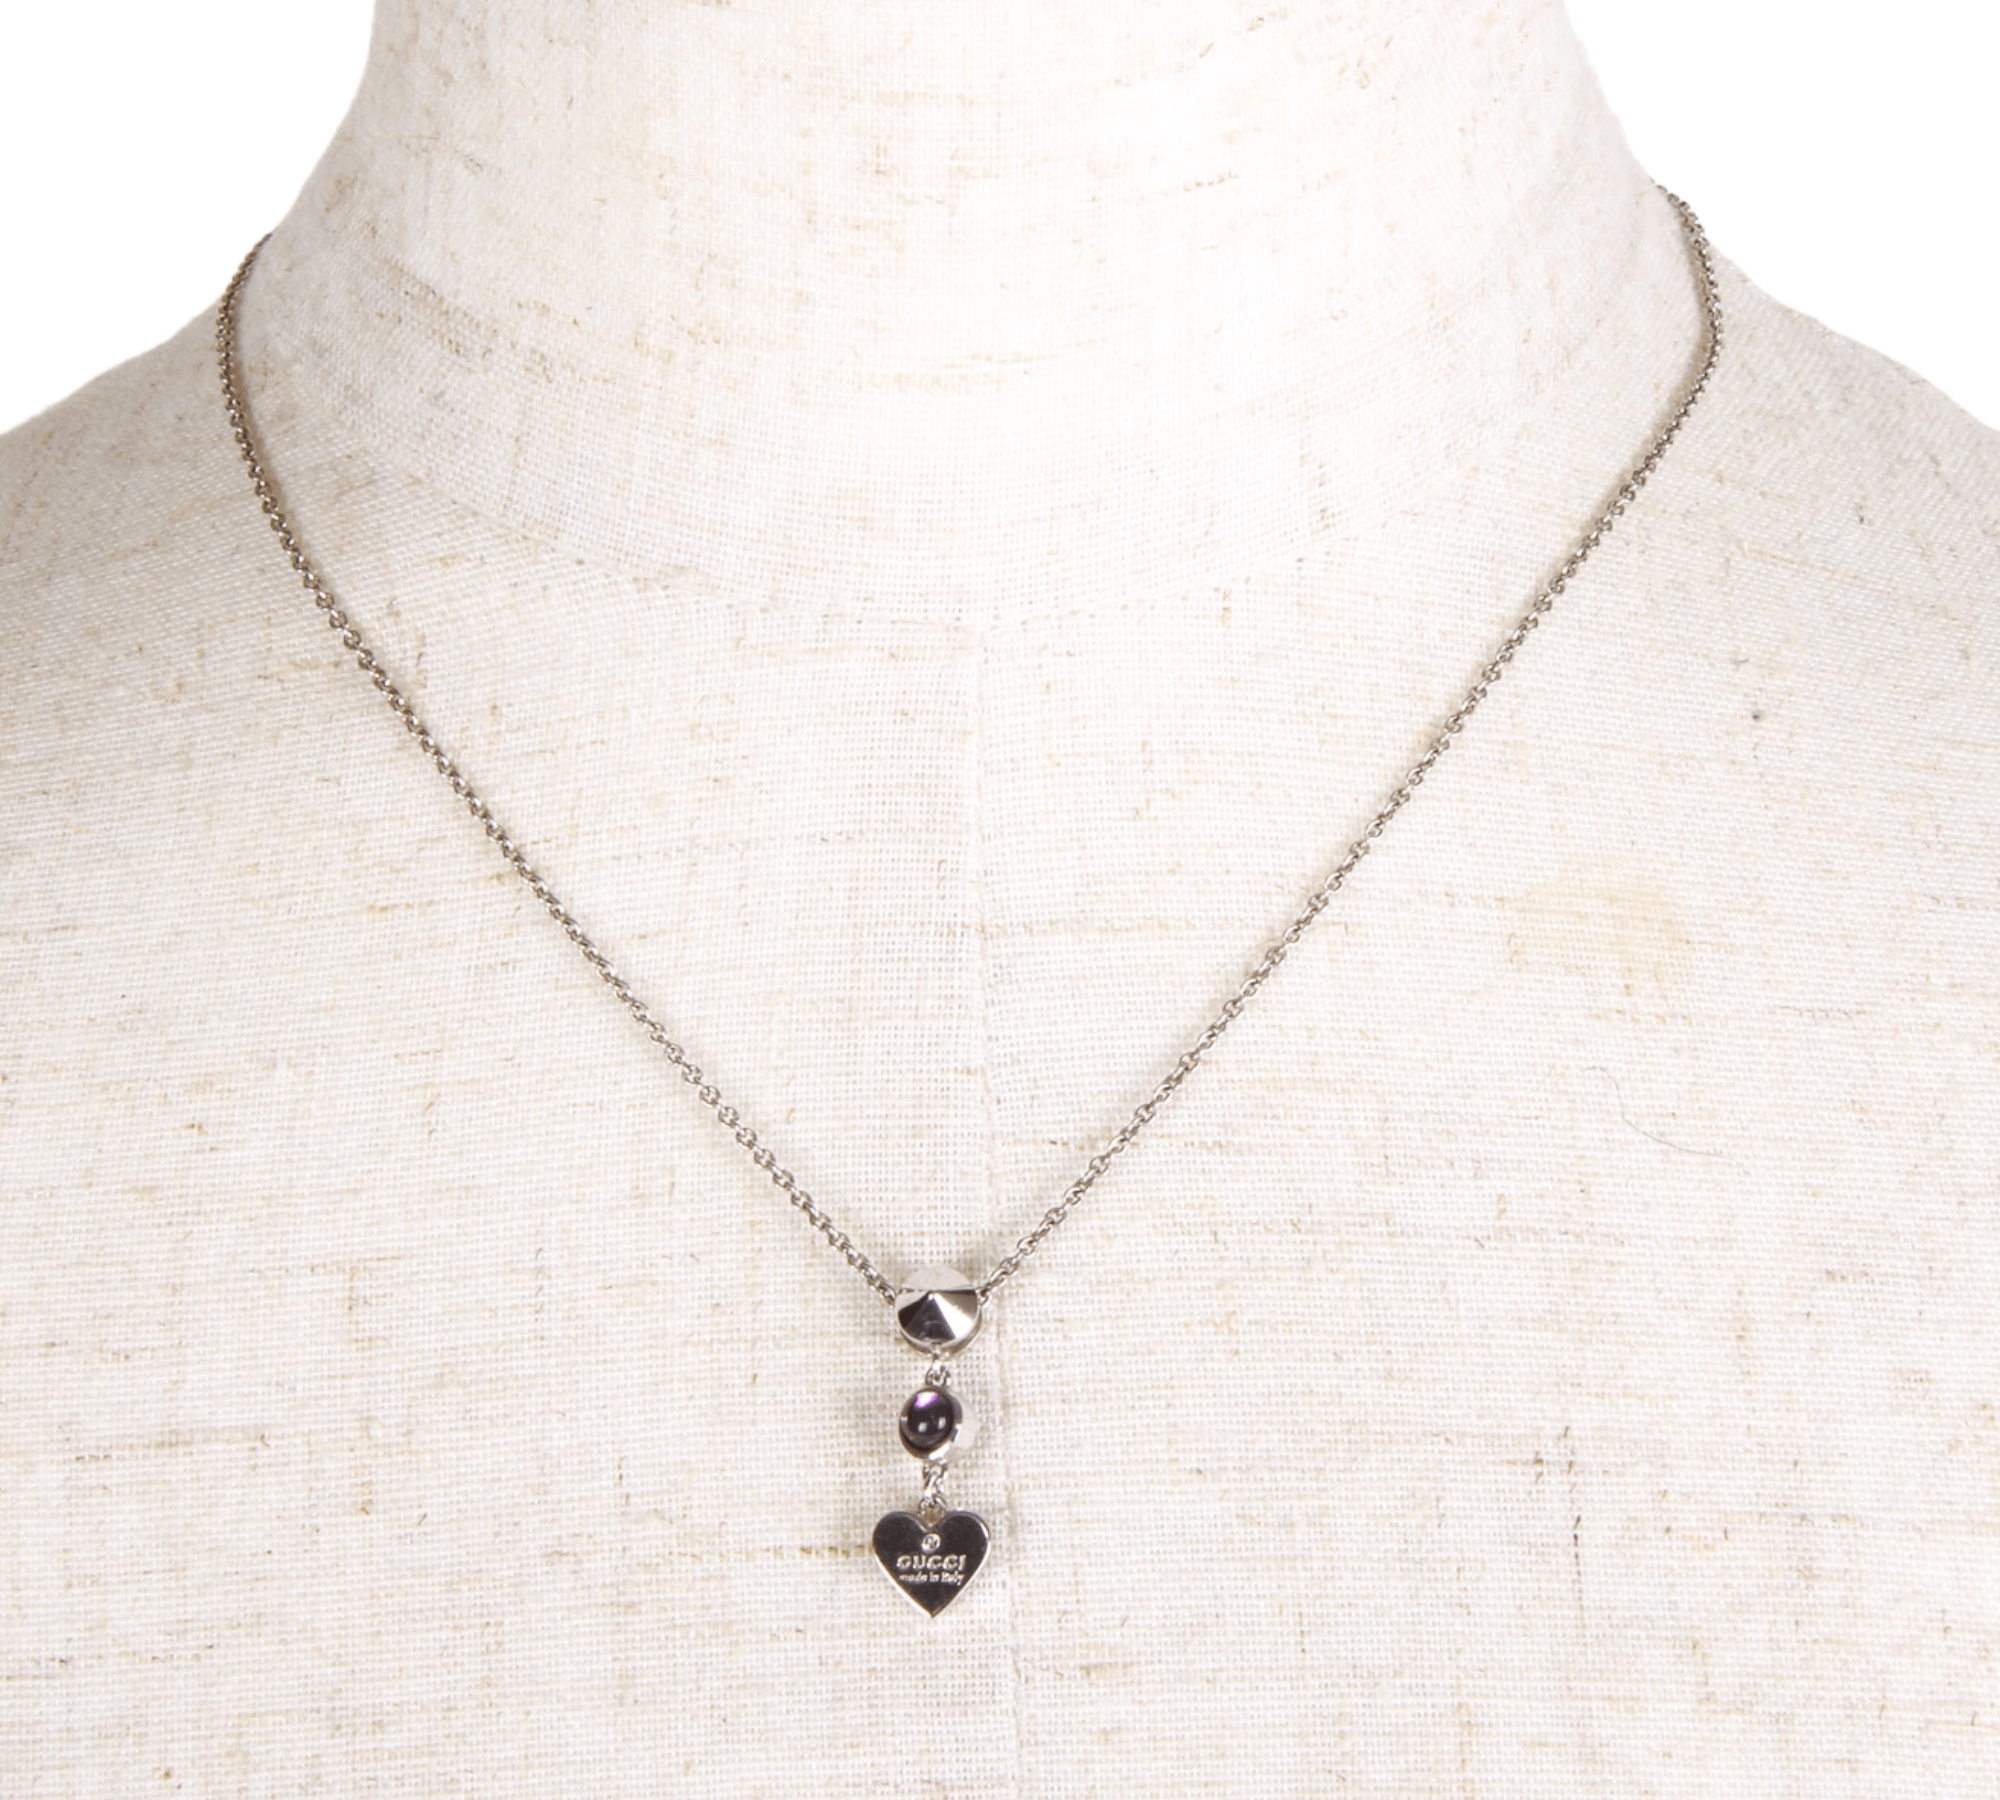 Authentic Gucci Heart pendant purple resin 925 silver necklace